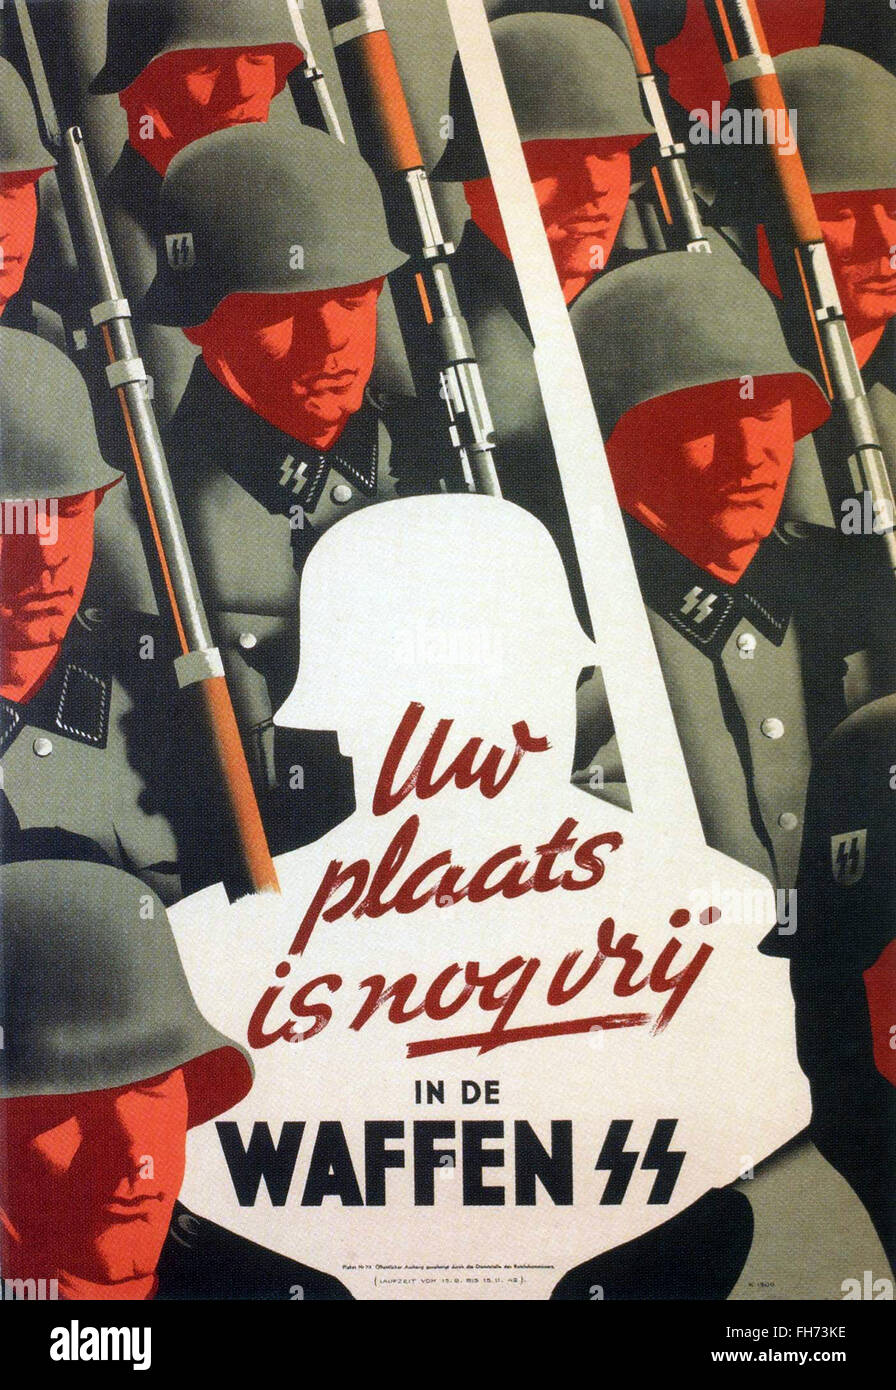 Waffen SS - Affiche de propagande nazie - WWII Banque D'Images